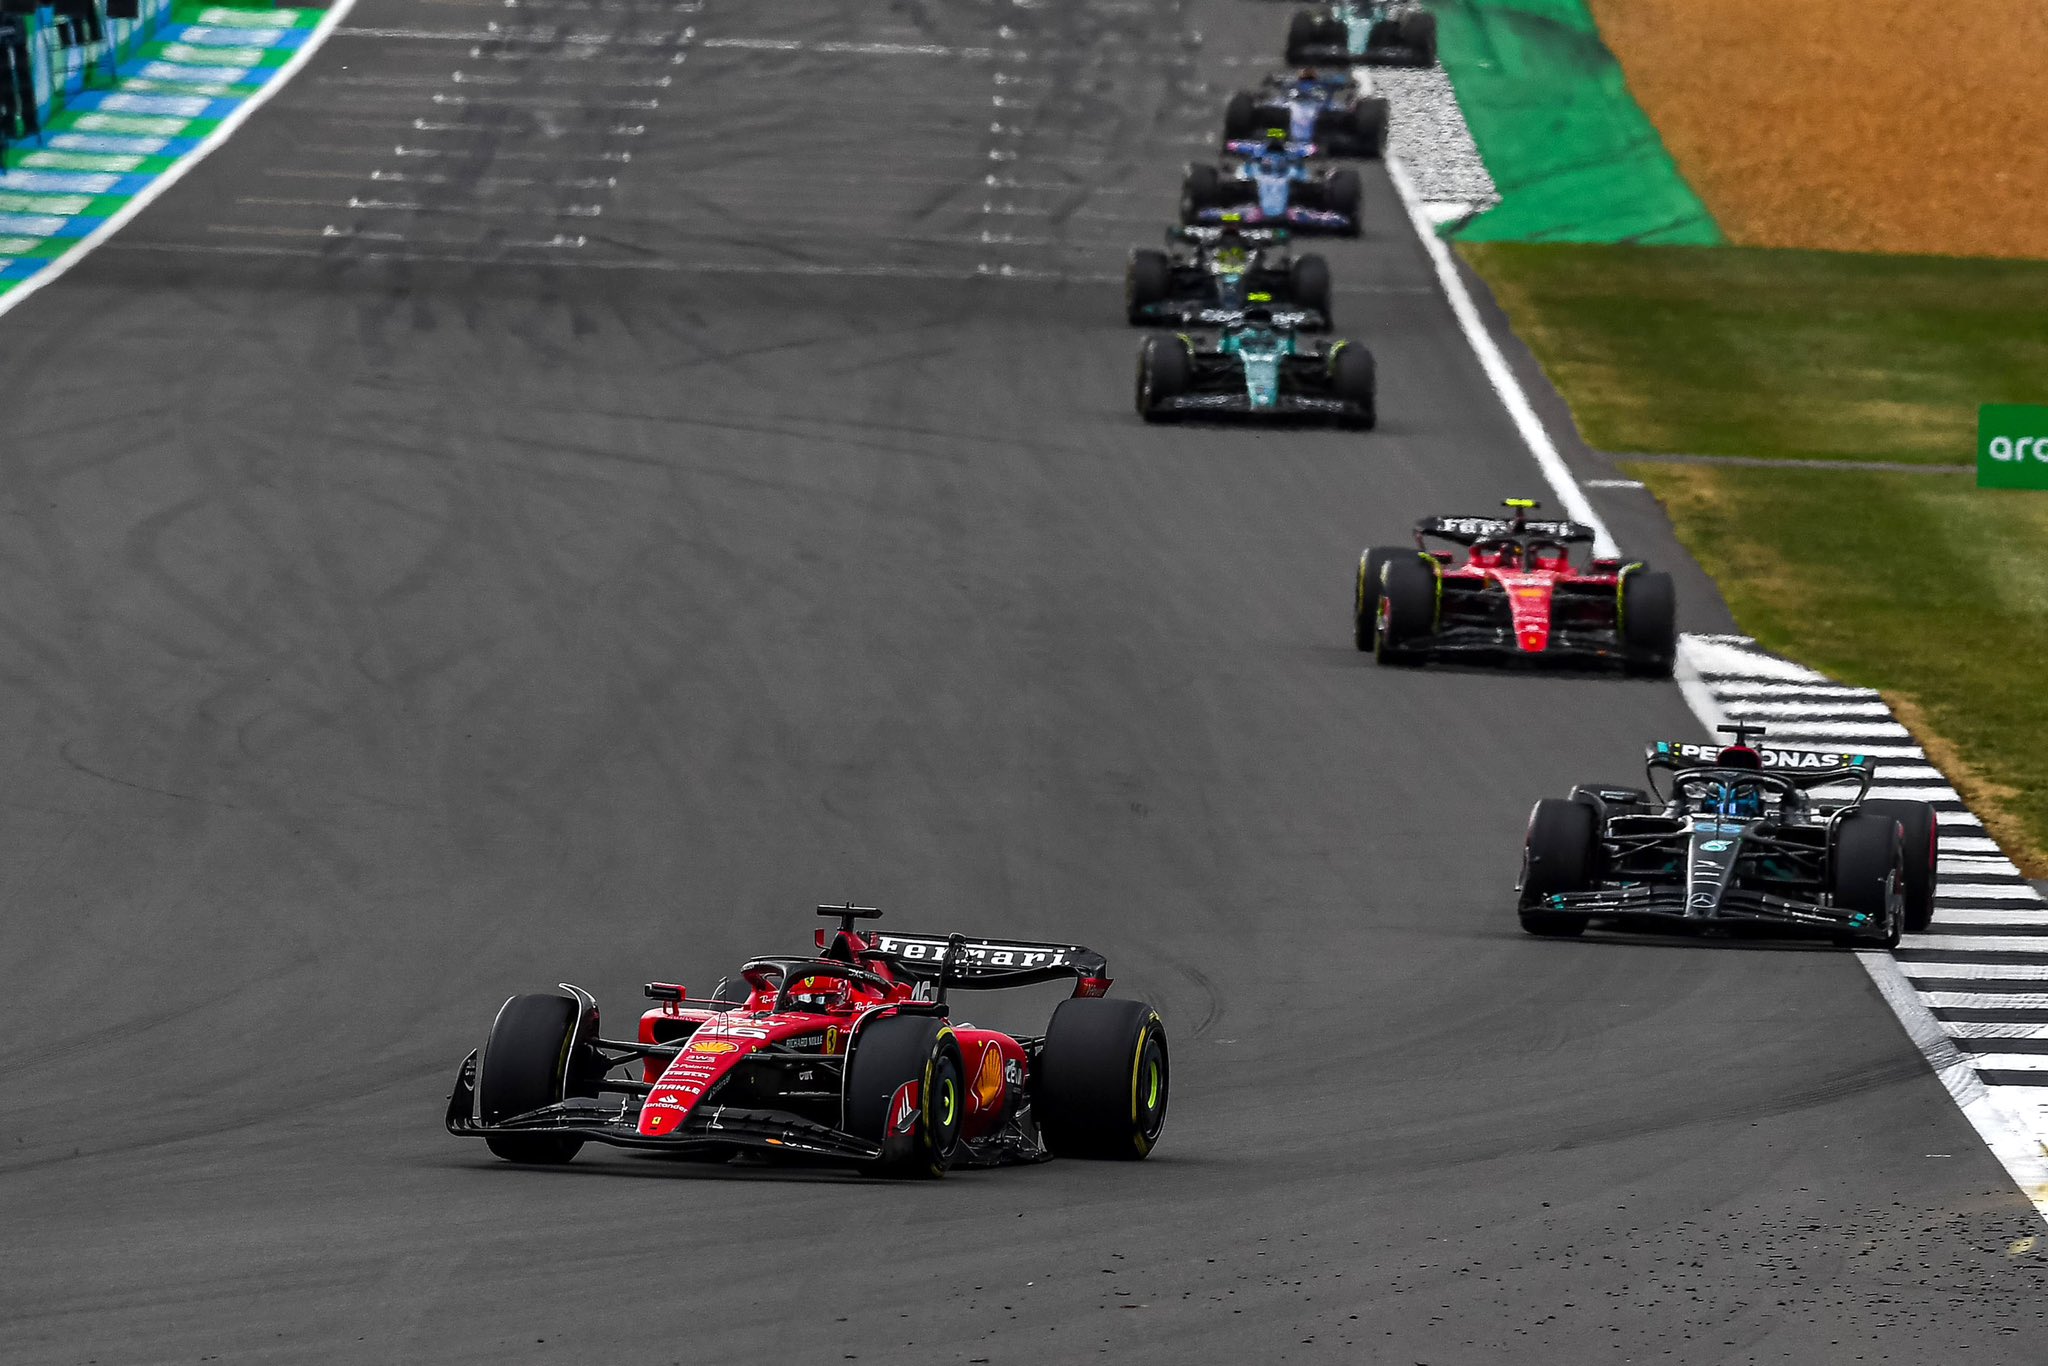 Ferrari culpa safety-car por queda, mas admite “pequena falta de ritmo” na Inglaterra